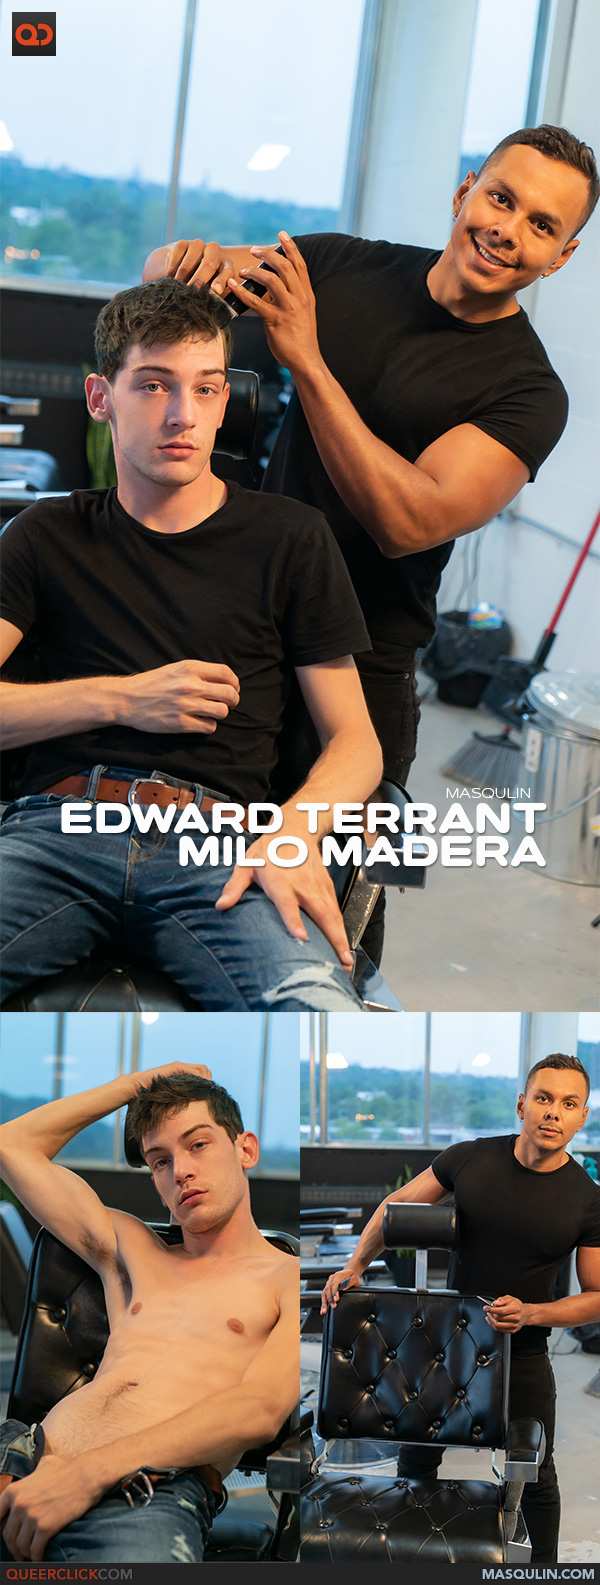 The Bro Network | Masqulin: Edward Terrant and Milo Madera